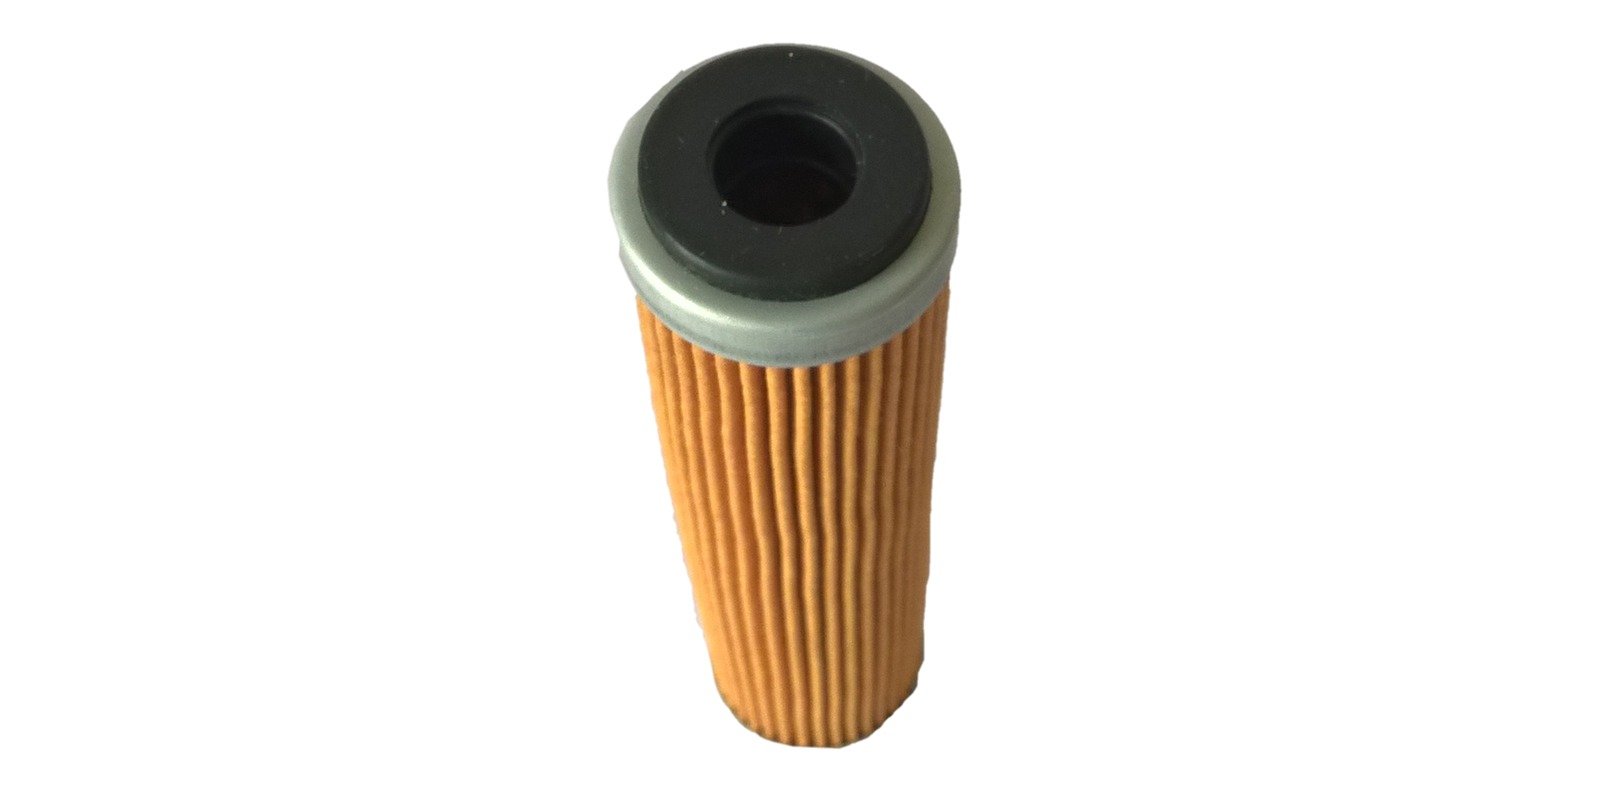 Obrázek produktu Olejový filtr ekvivalent HF631, Q-TECH